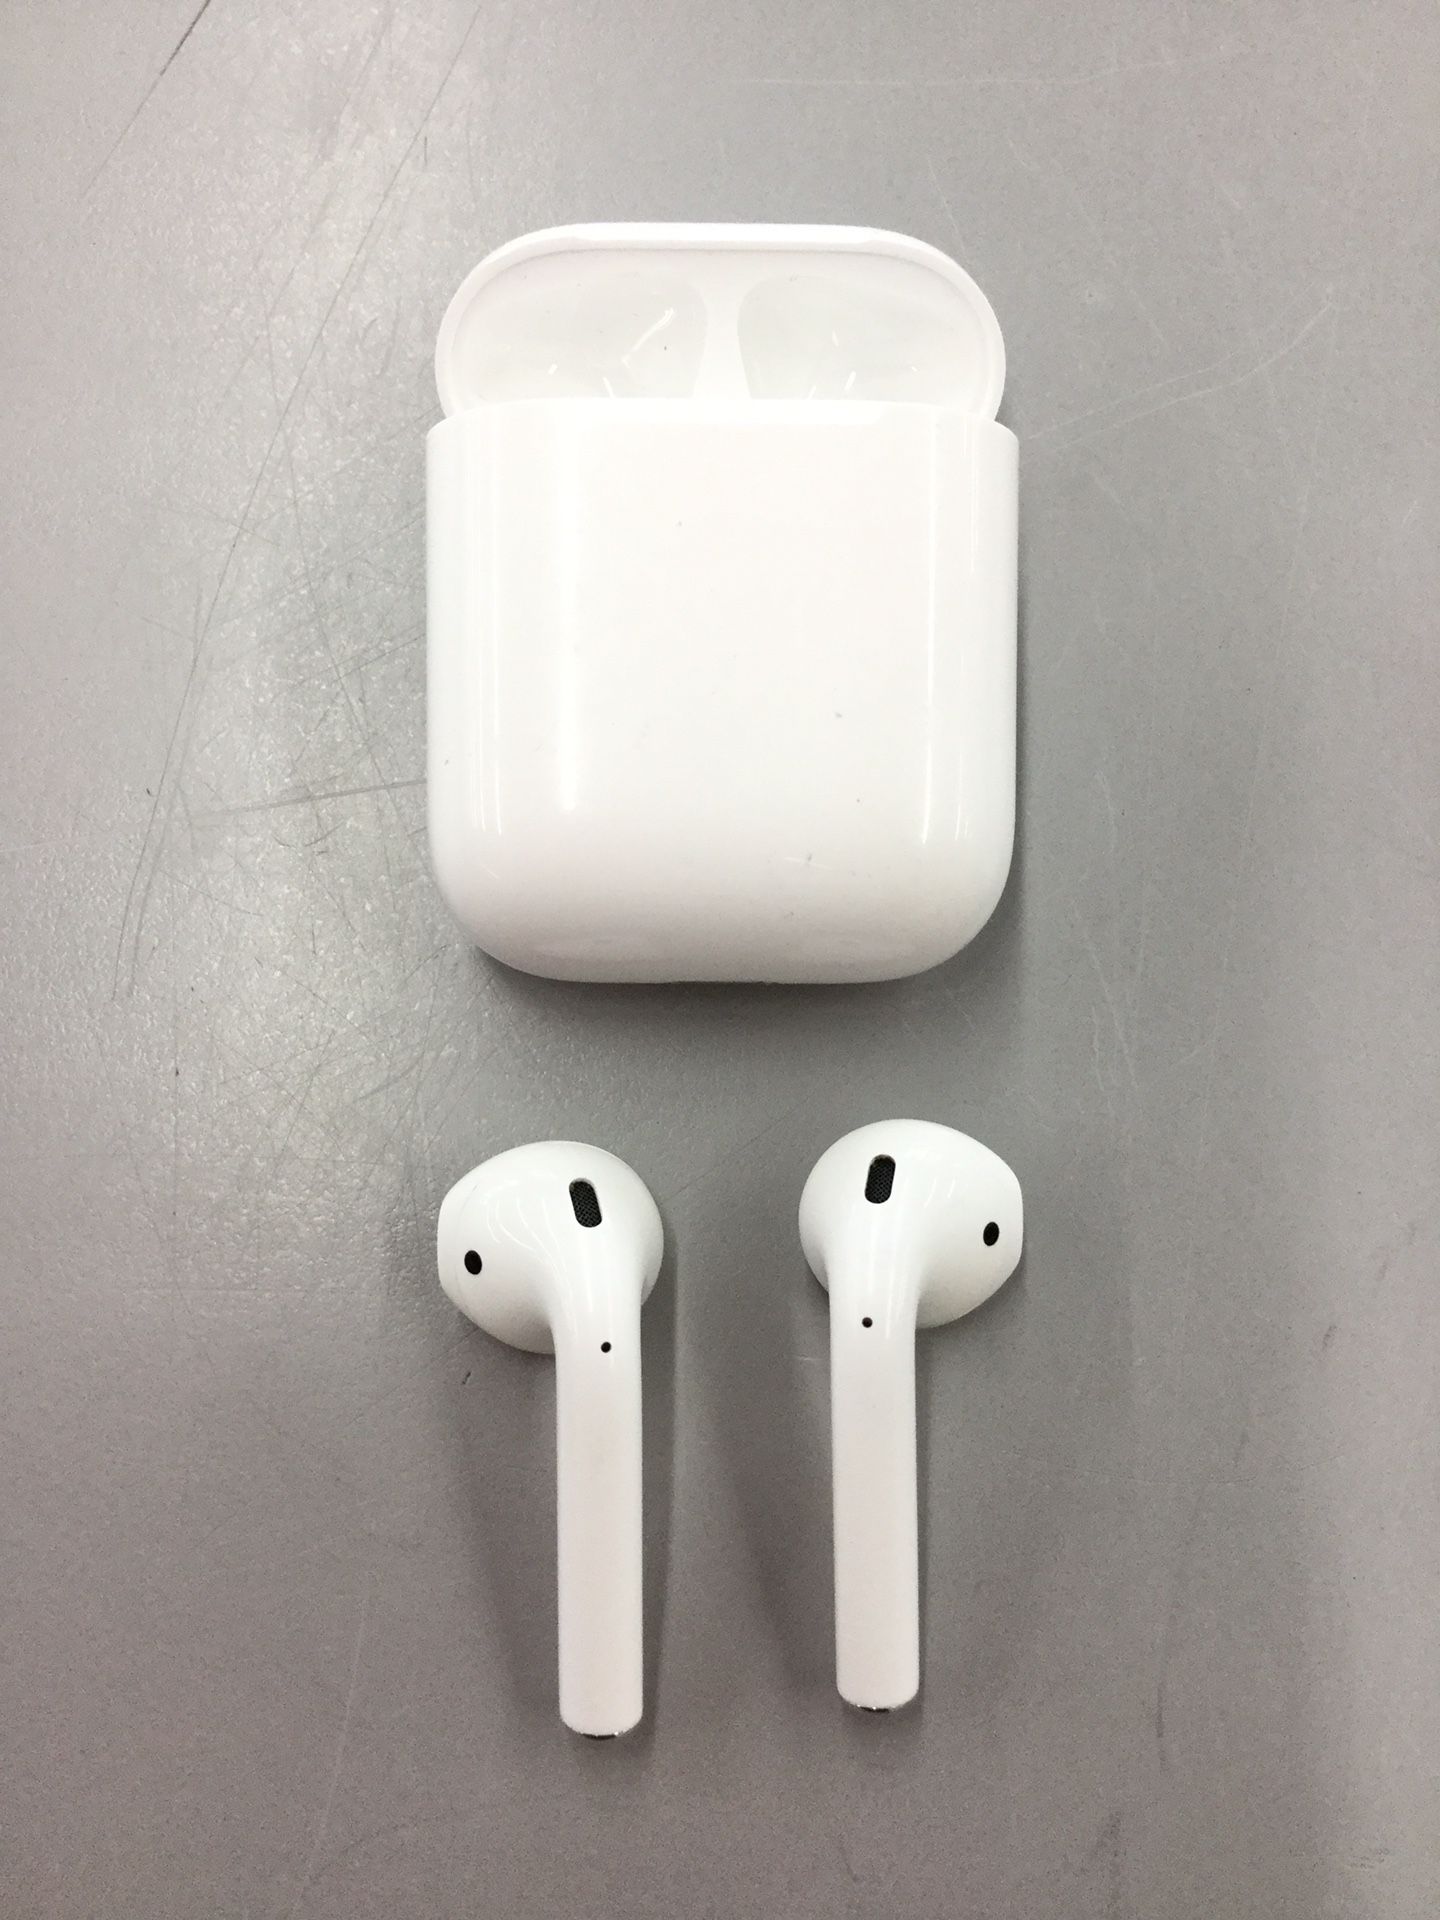 Apple Airpods / AirPod Headphones Earbuds (1st gen)